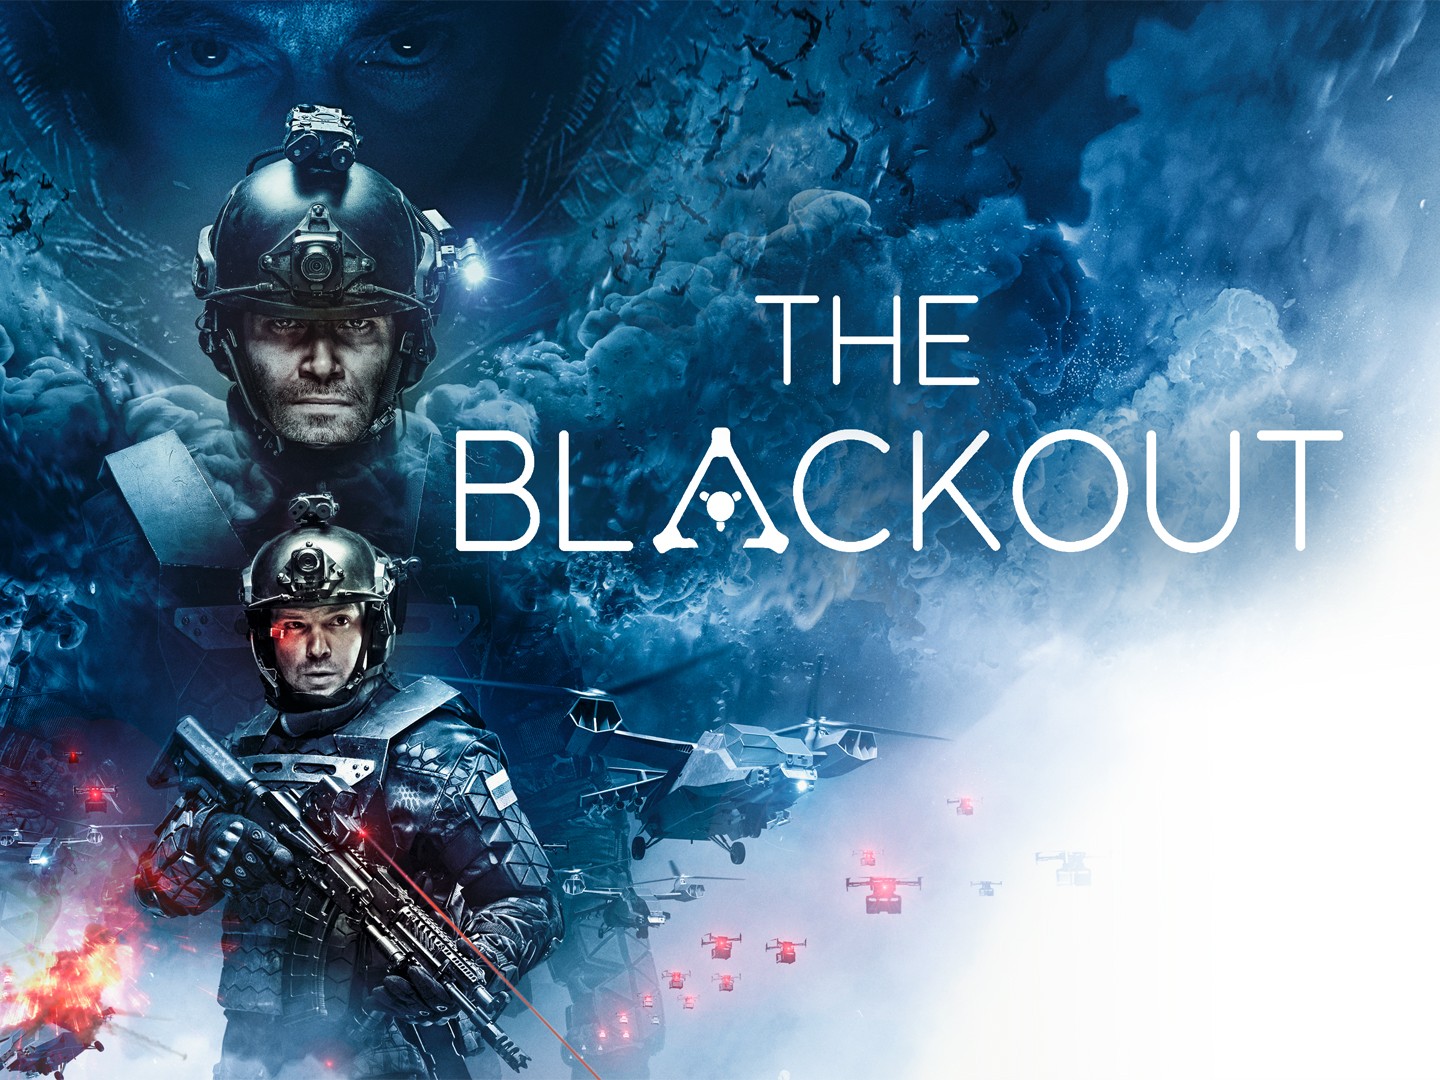 BLACKOUT-THE FILM